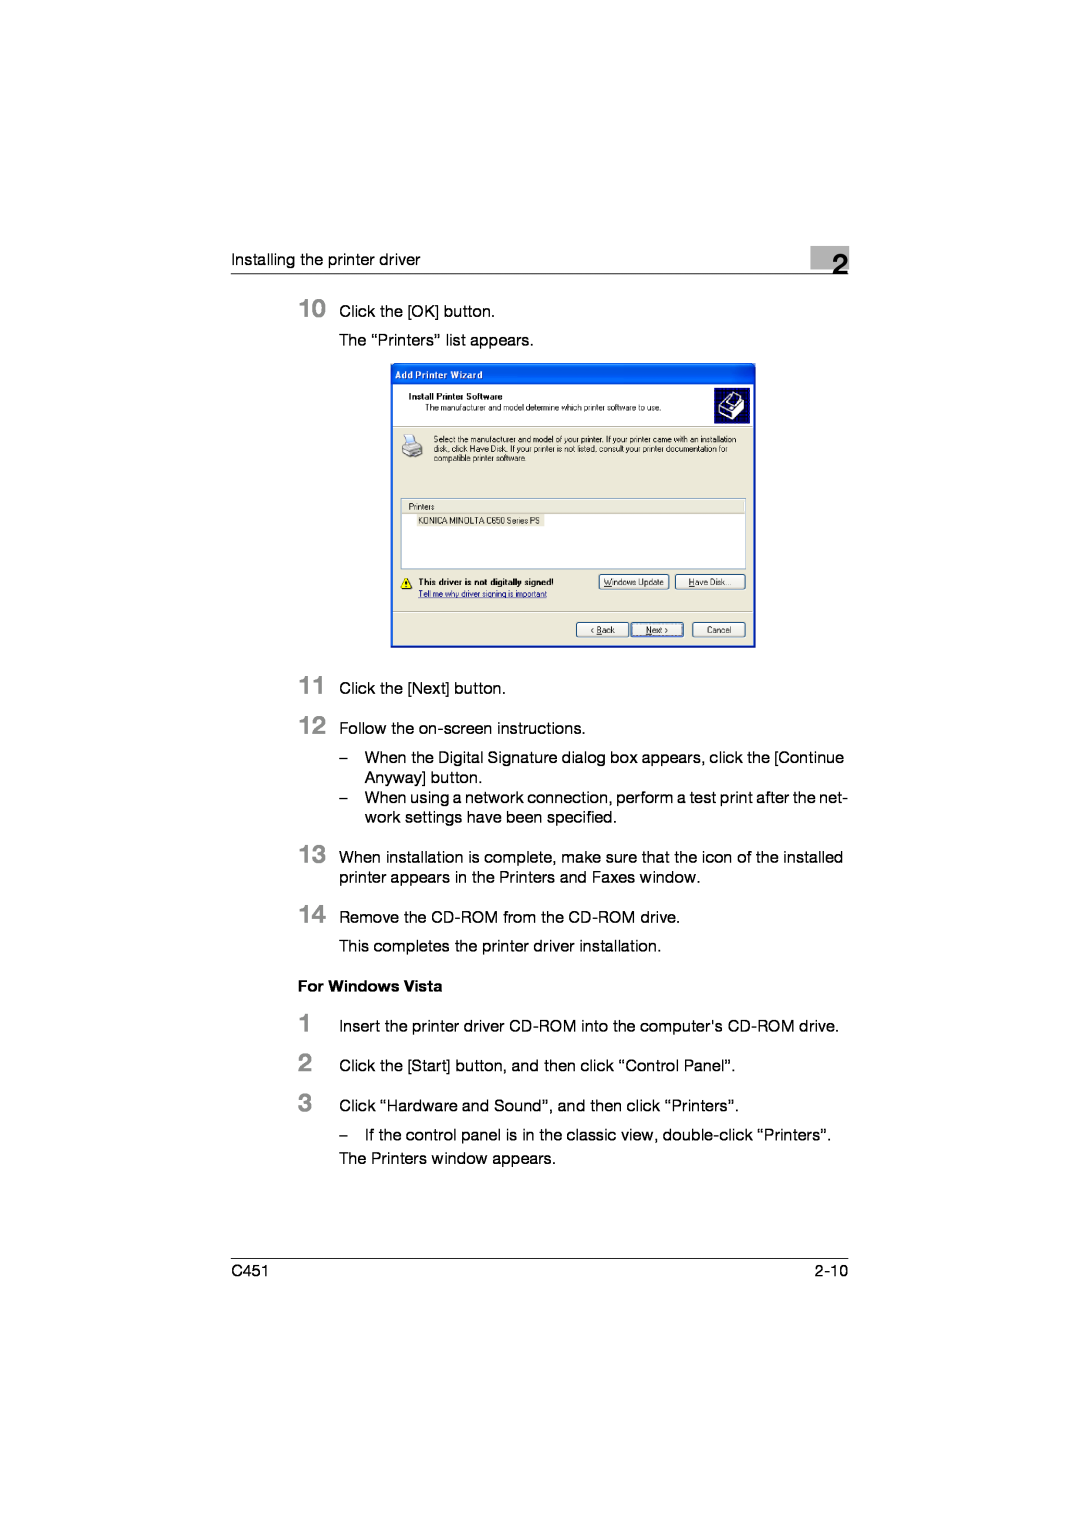 Konica Minolta C451 manual 10 11 12, 1 2 3, For Windows Vista 